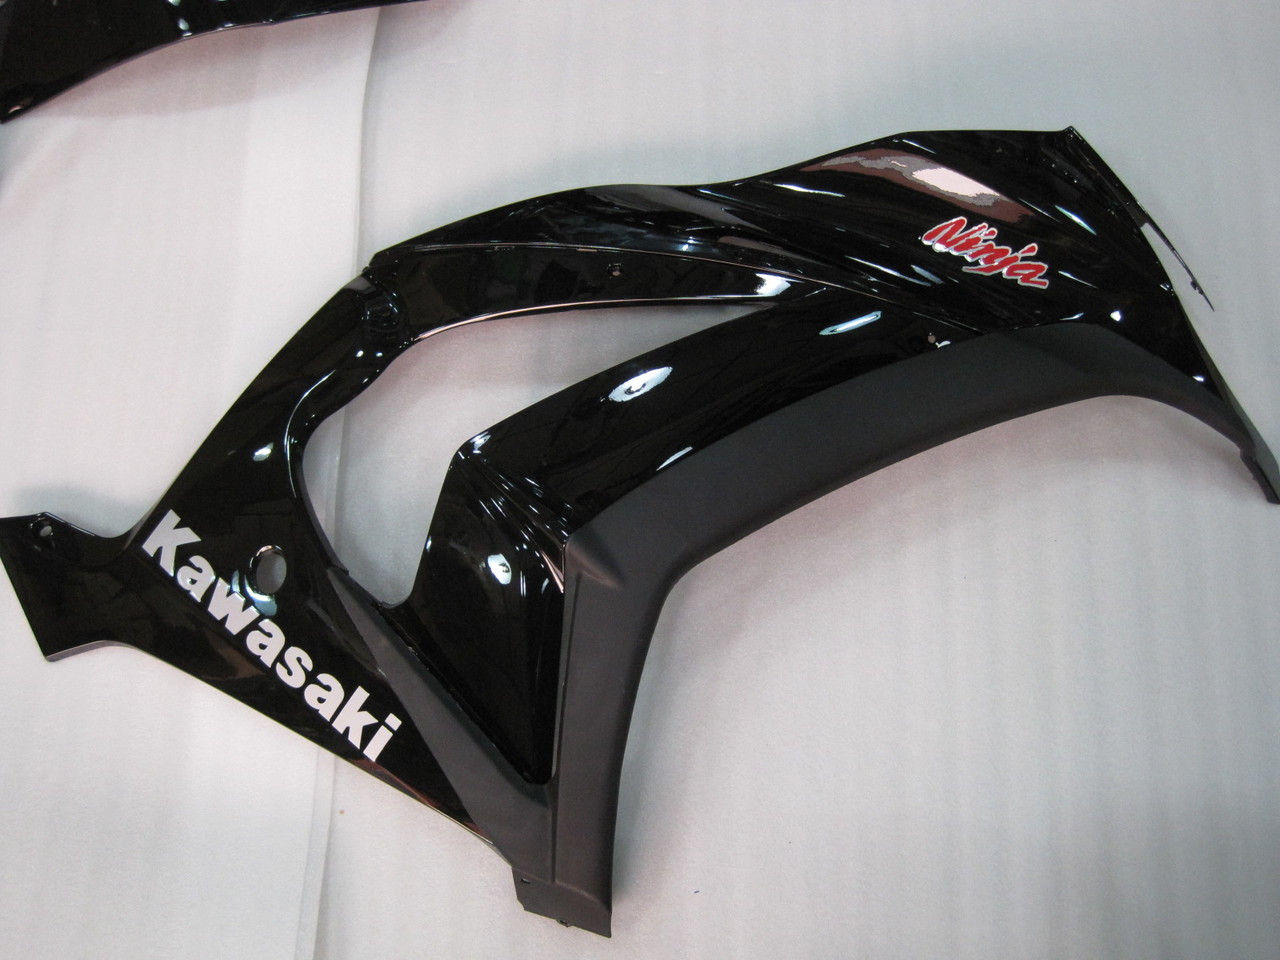 Fairings Plastics Kawasaki ZX10R Ninja Black Racing (2011-2016)